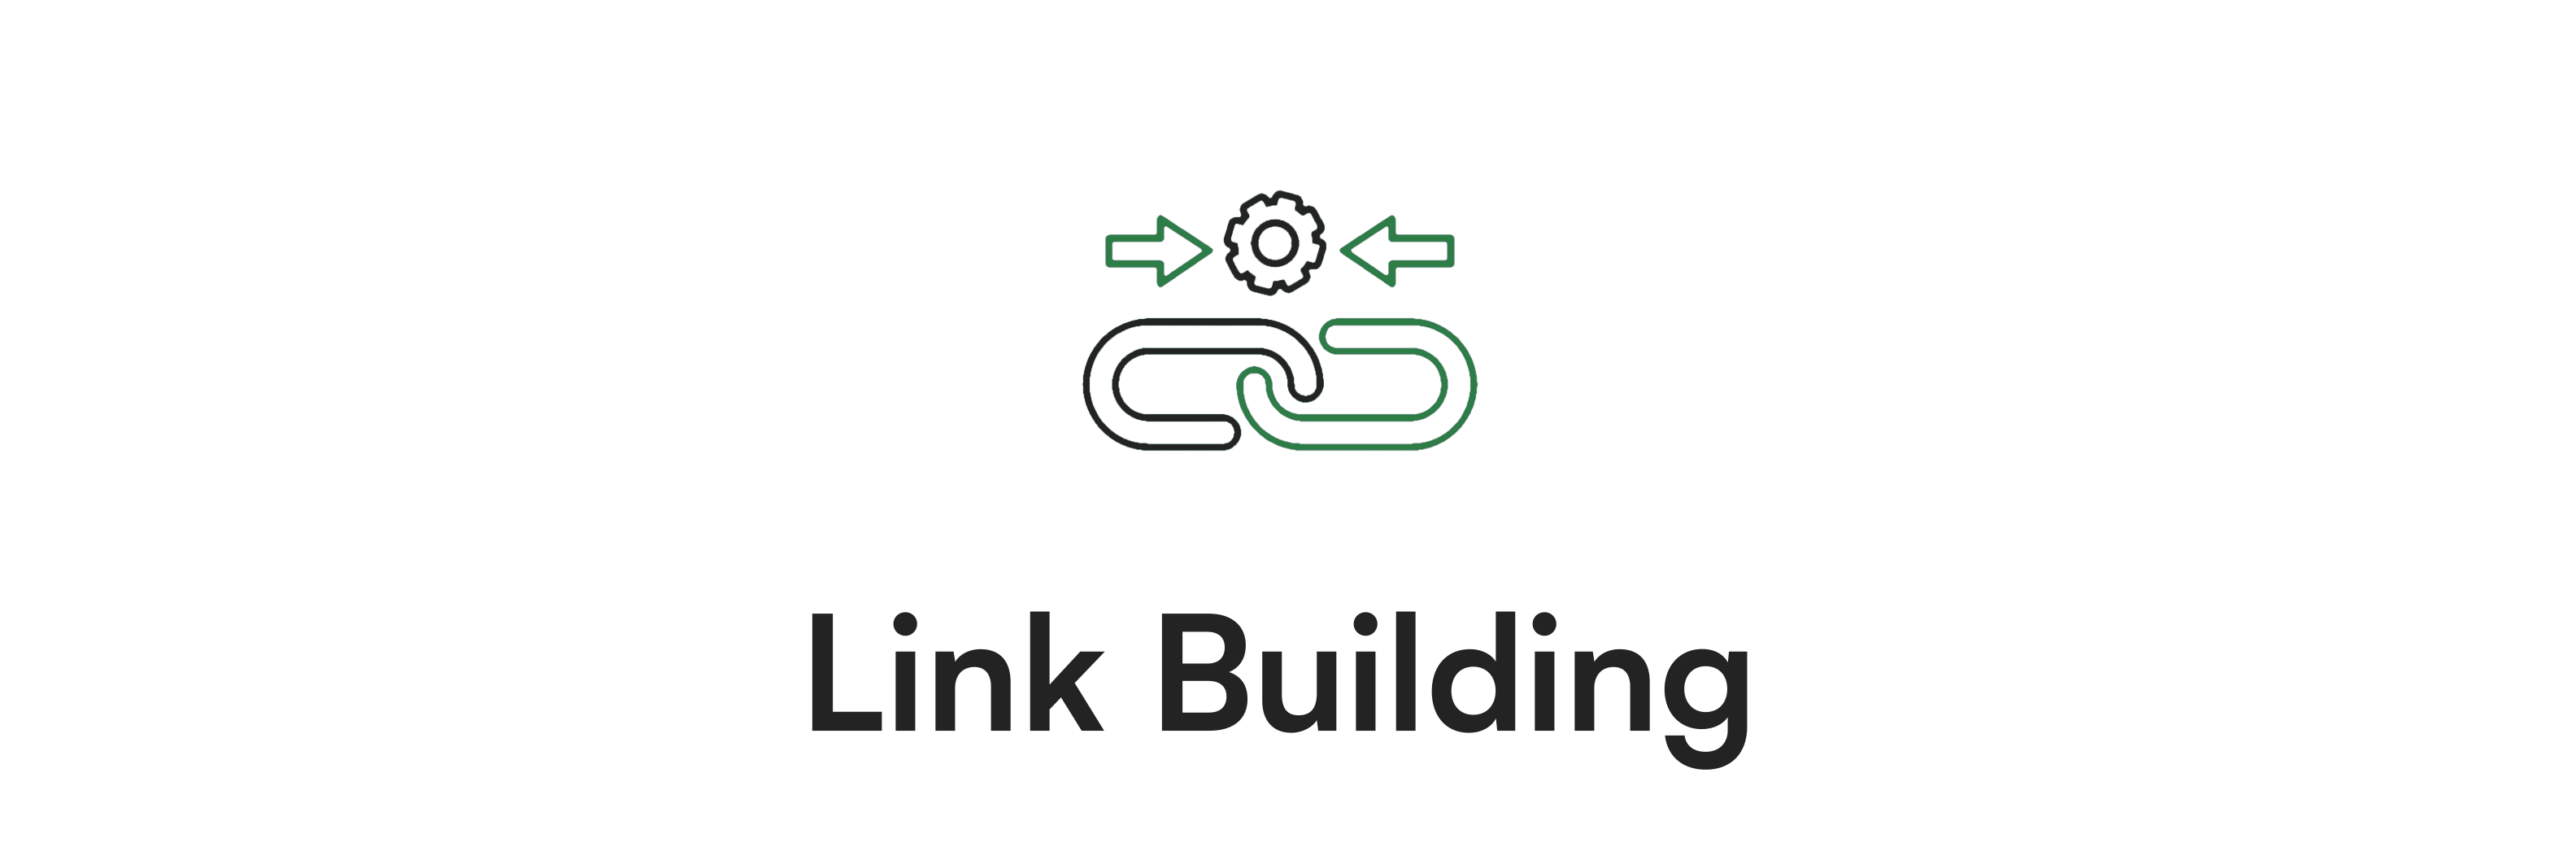 link building